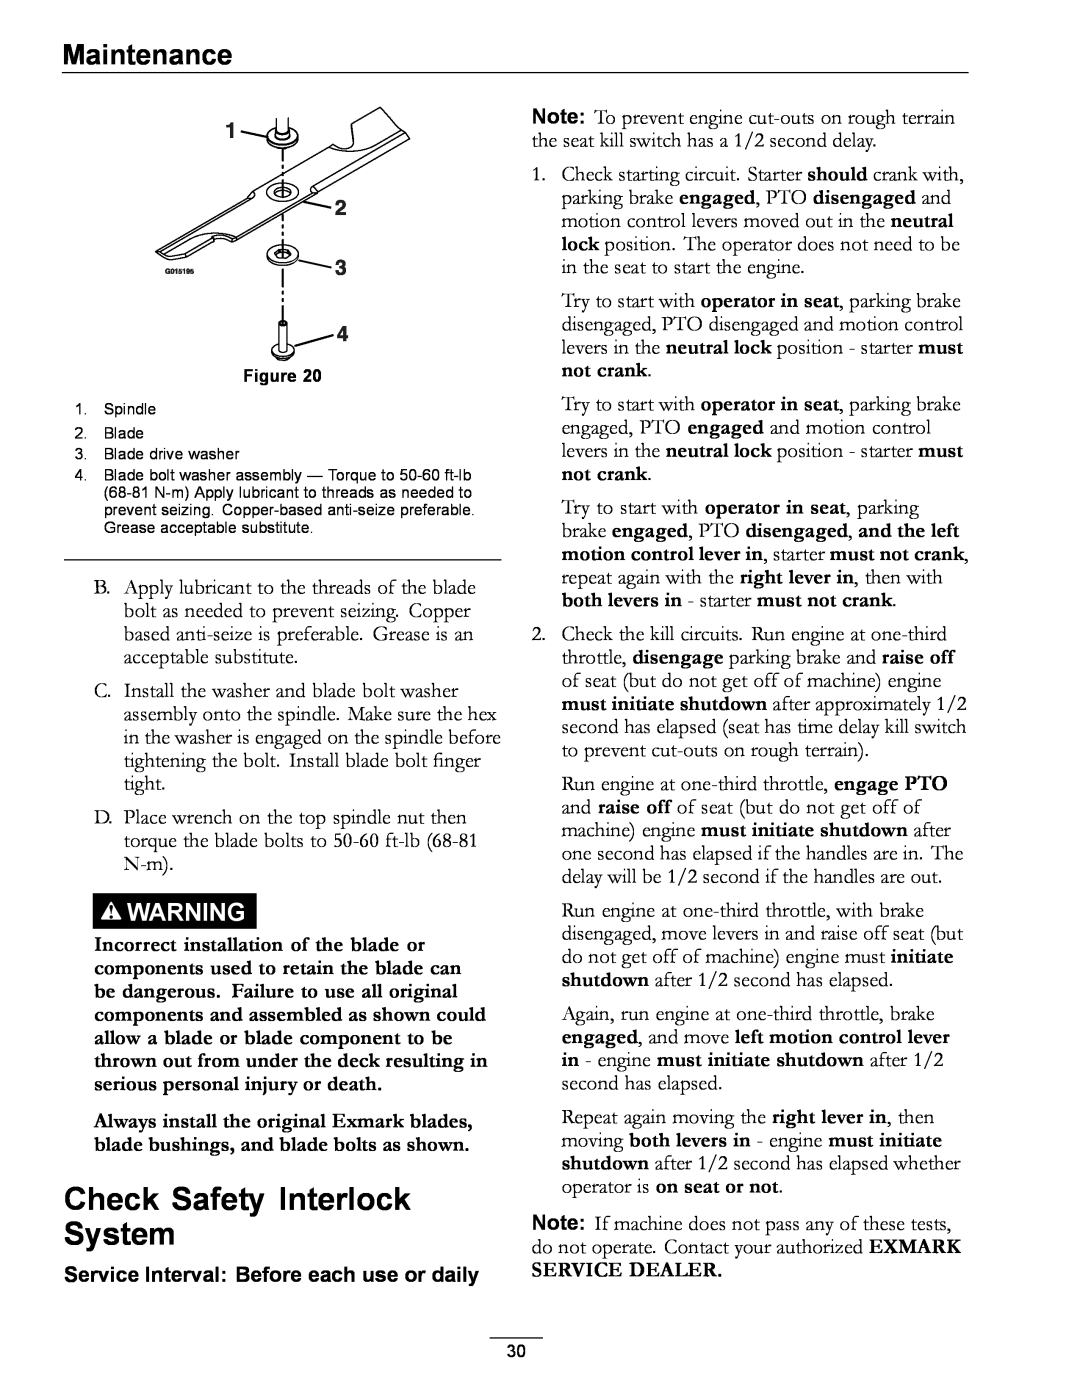 Exmark 4500-996 Rev A Check Safety Interlock System, Service Dealer, Maintenance, Spindle 2. Blade 3. Blade drive washer 